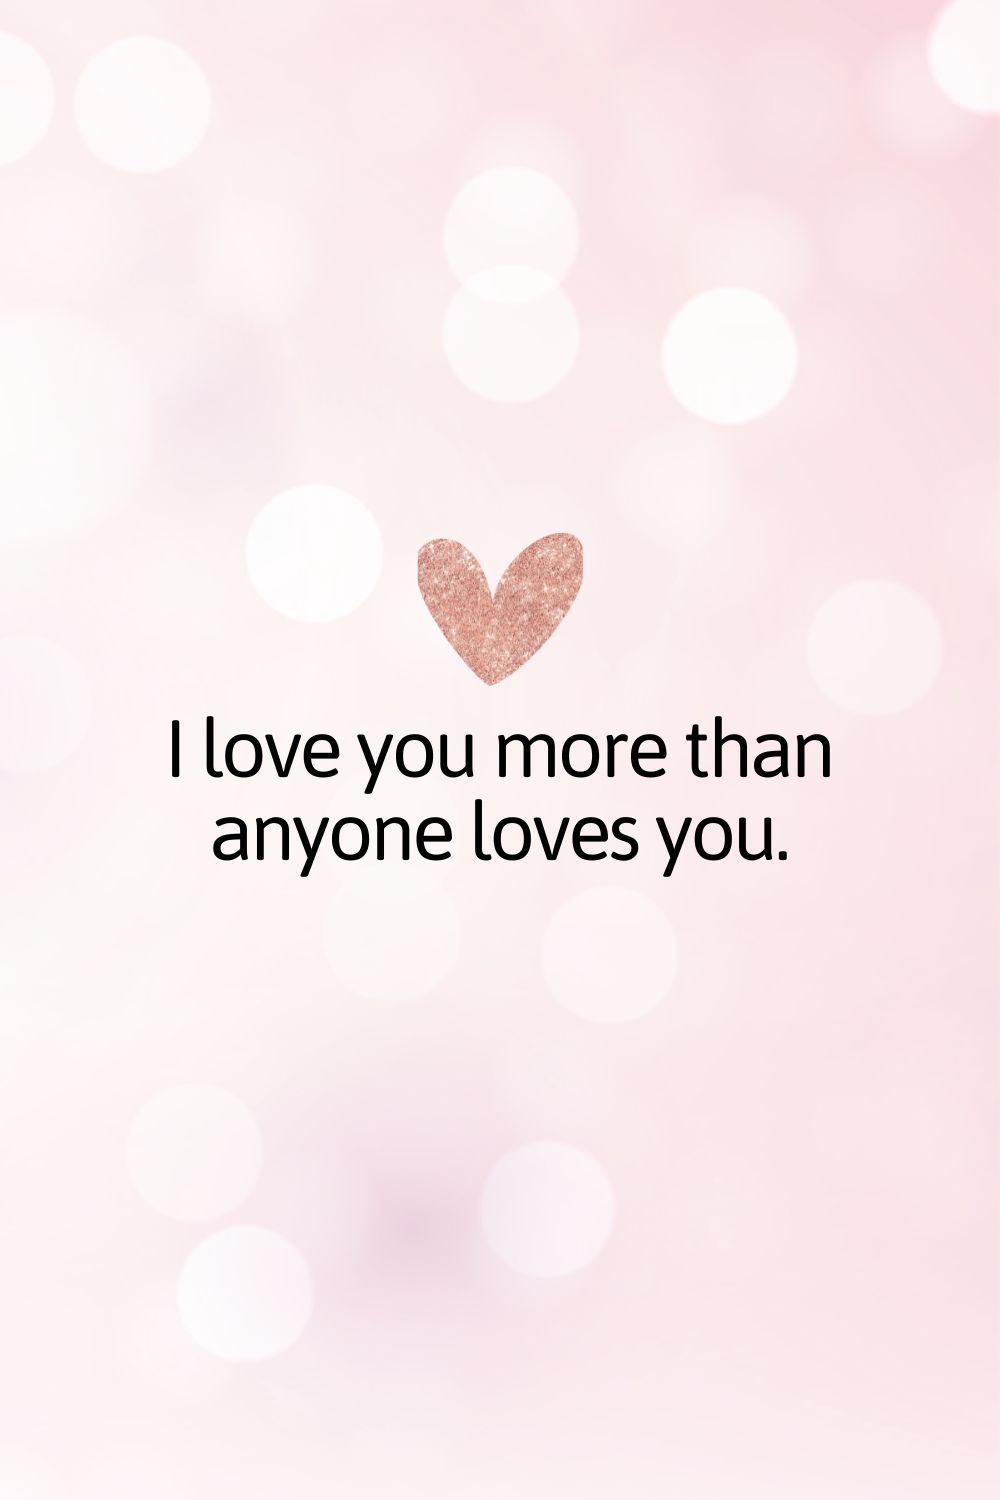 I love you more than anyone loves you